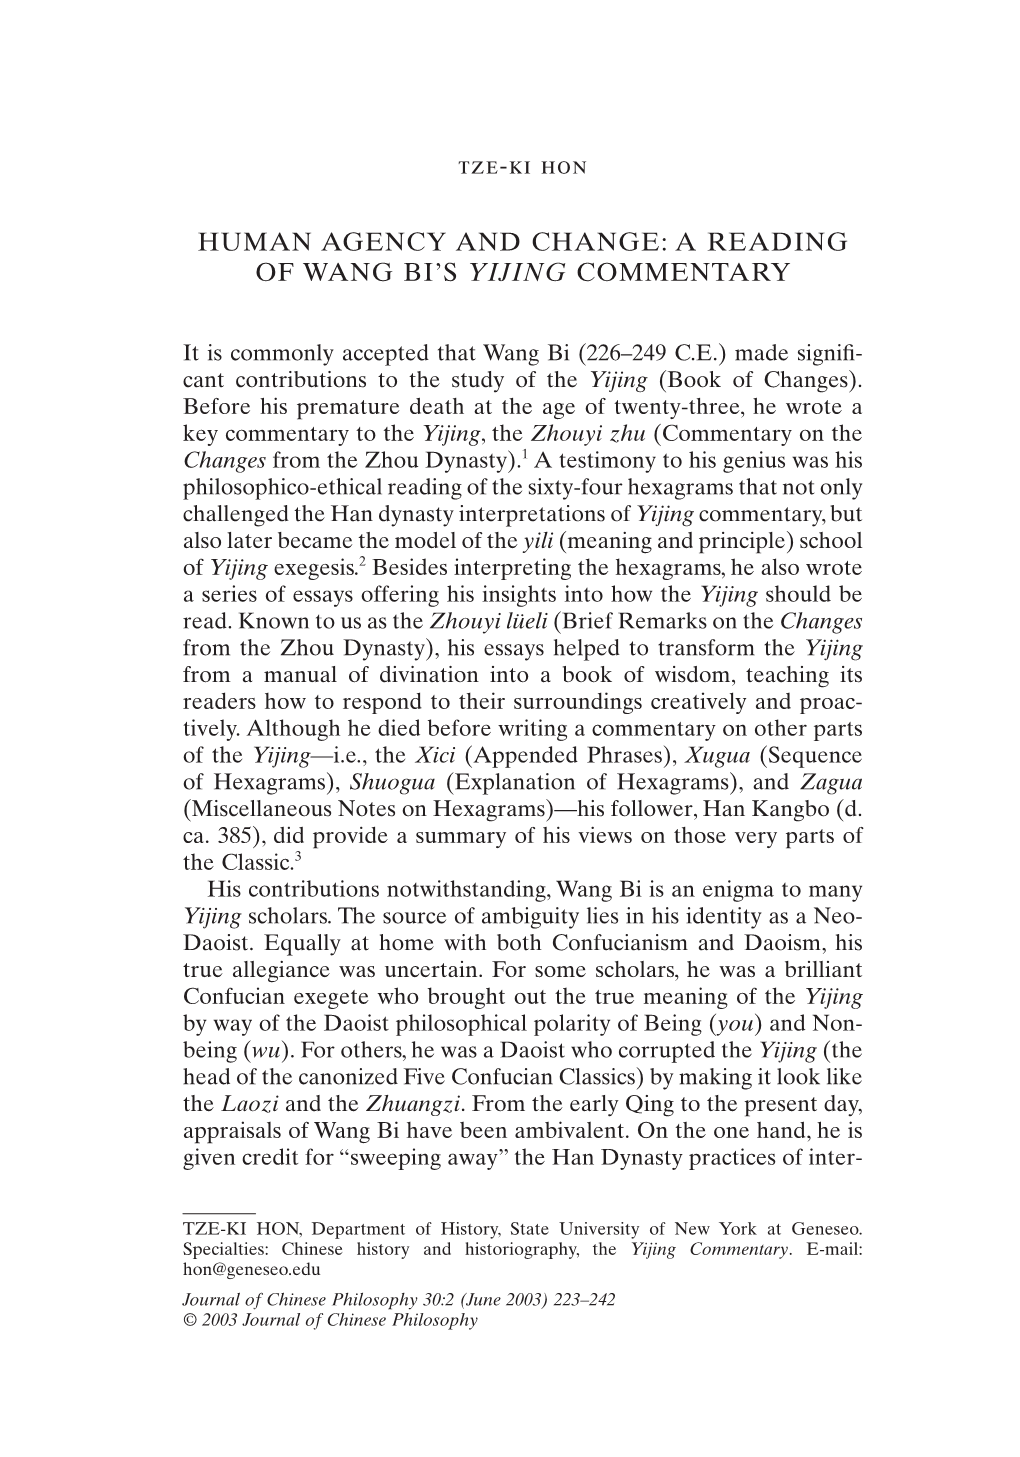 “Human Agency and Change: a Reading of Wang Bi's Yijing Commentary”